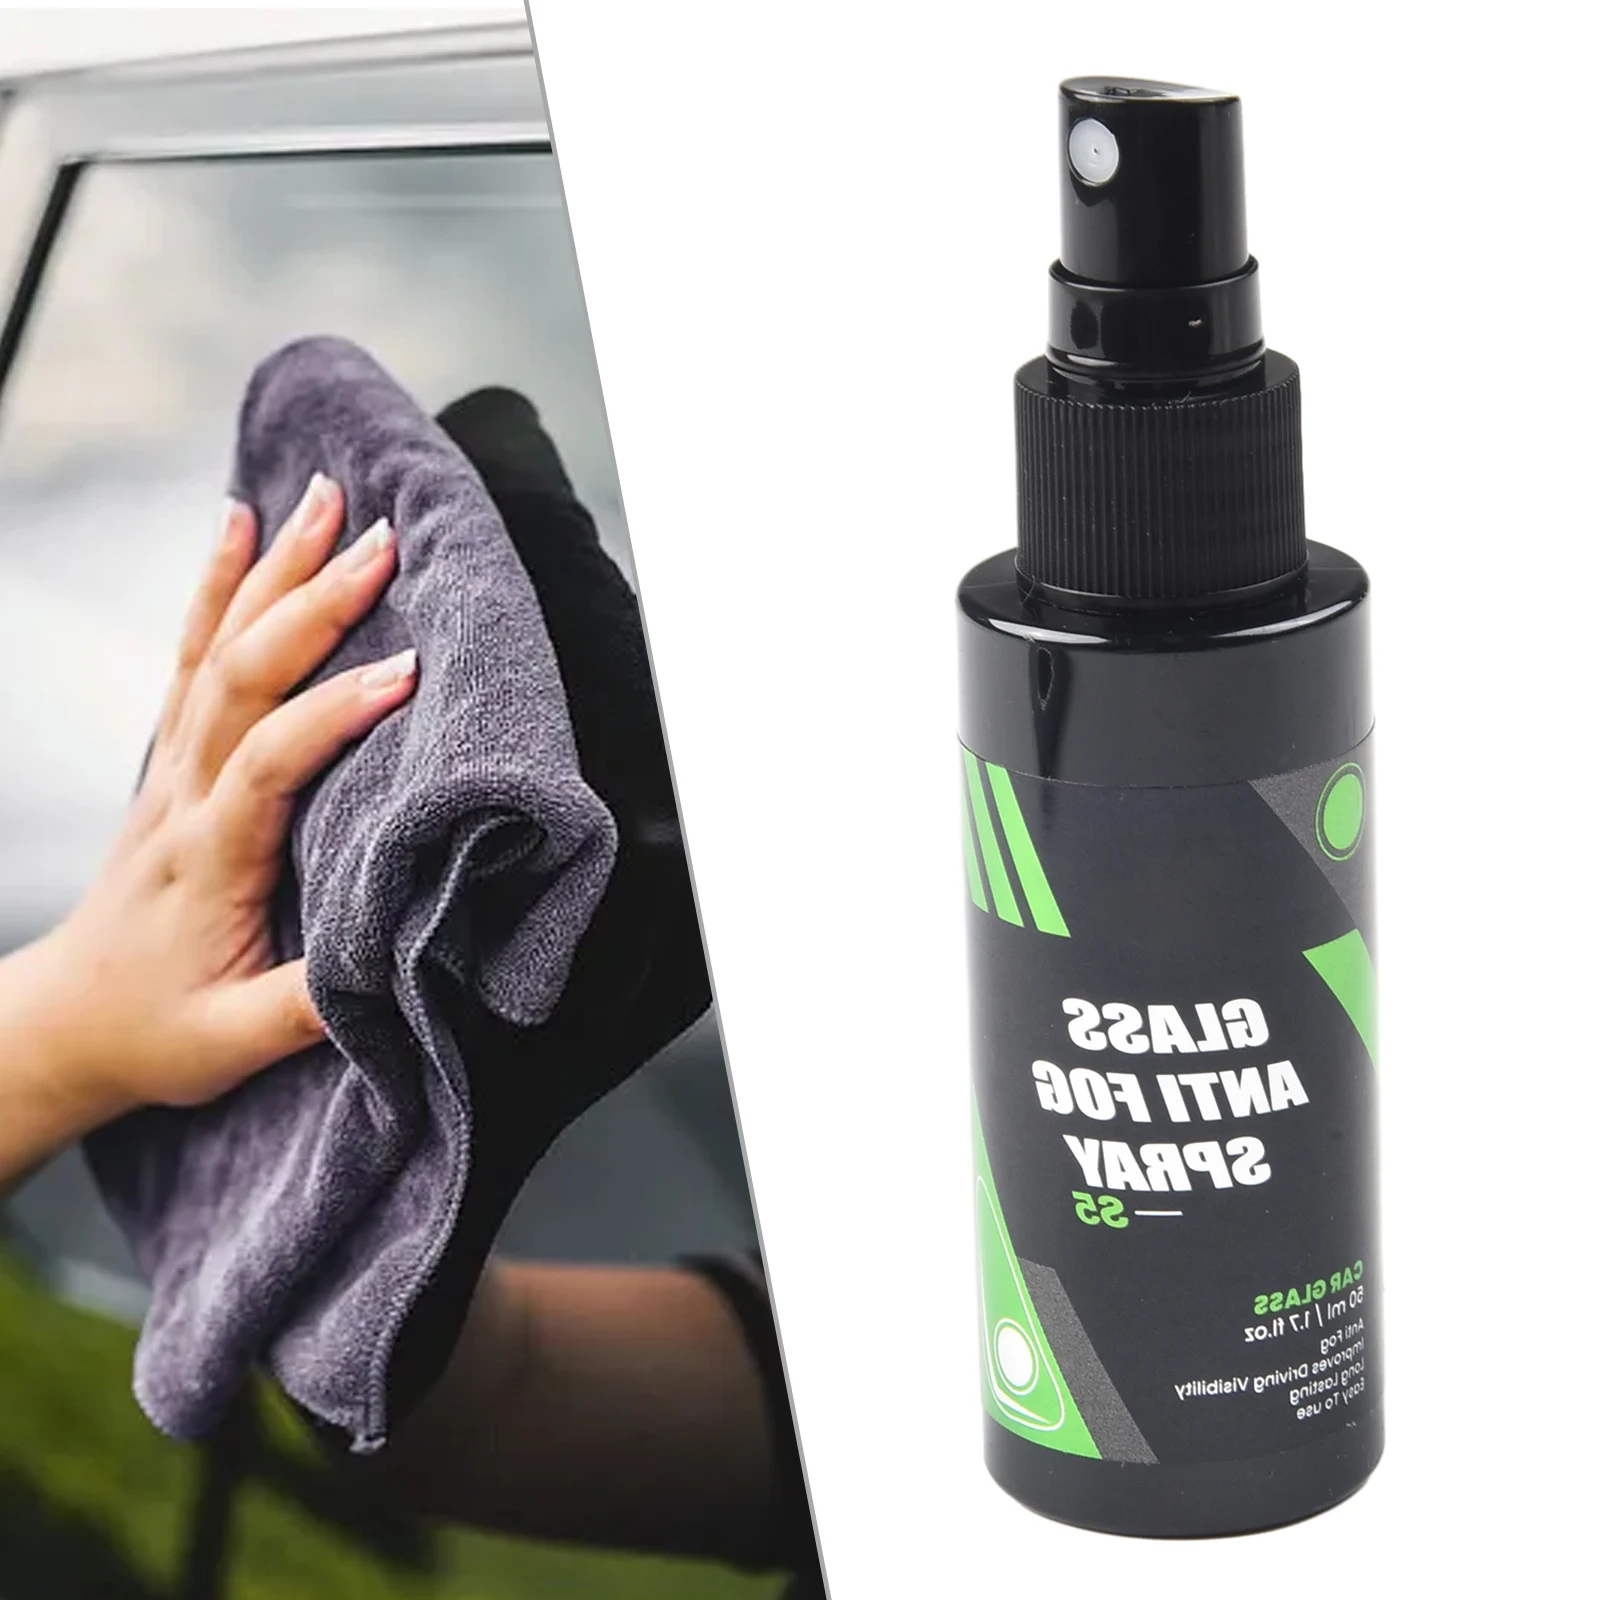 

HGKJ-AUTO-S5 For Car Inside Glass Anti Fog Spray Prevents Fogging Clear Vision Water Repellent Spray Anti-Rain Coating Car Glass